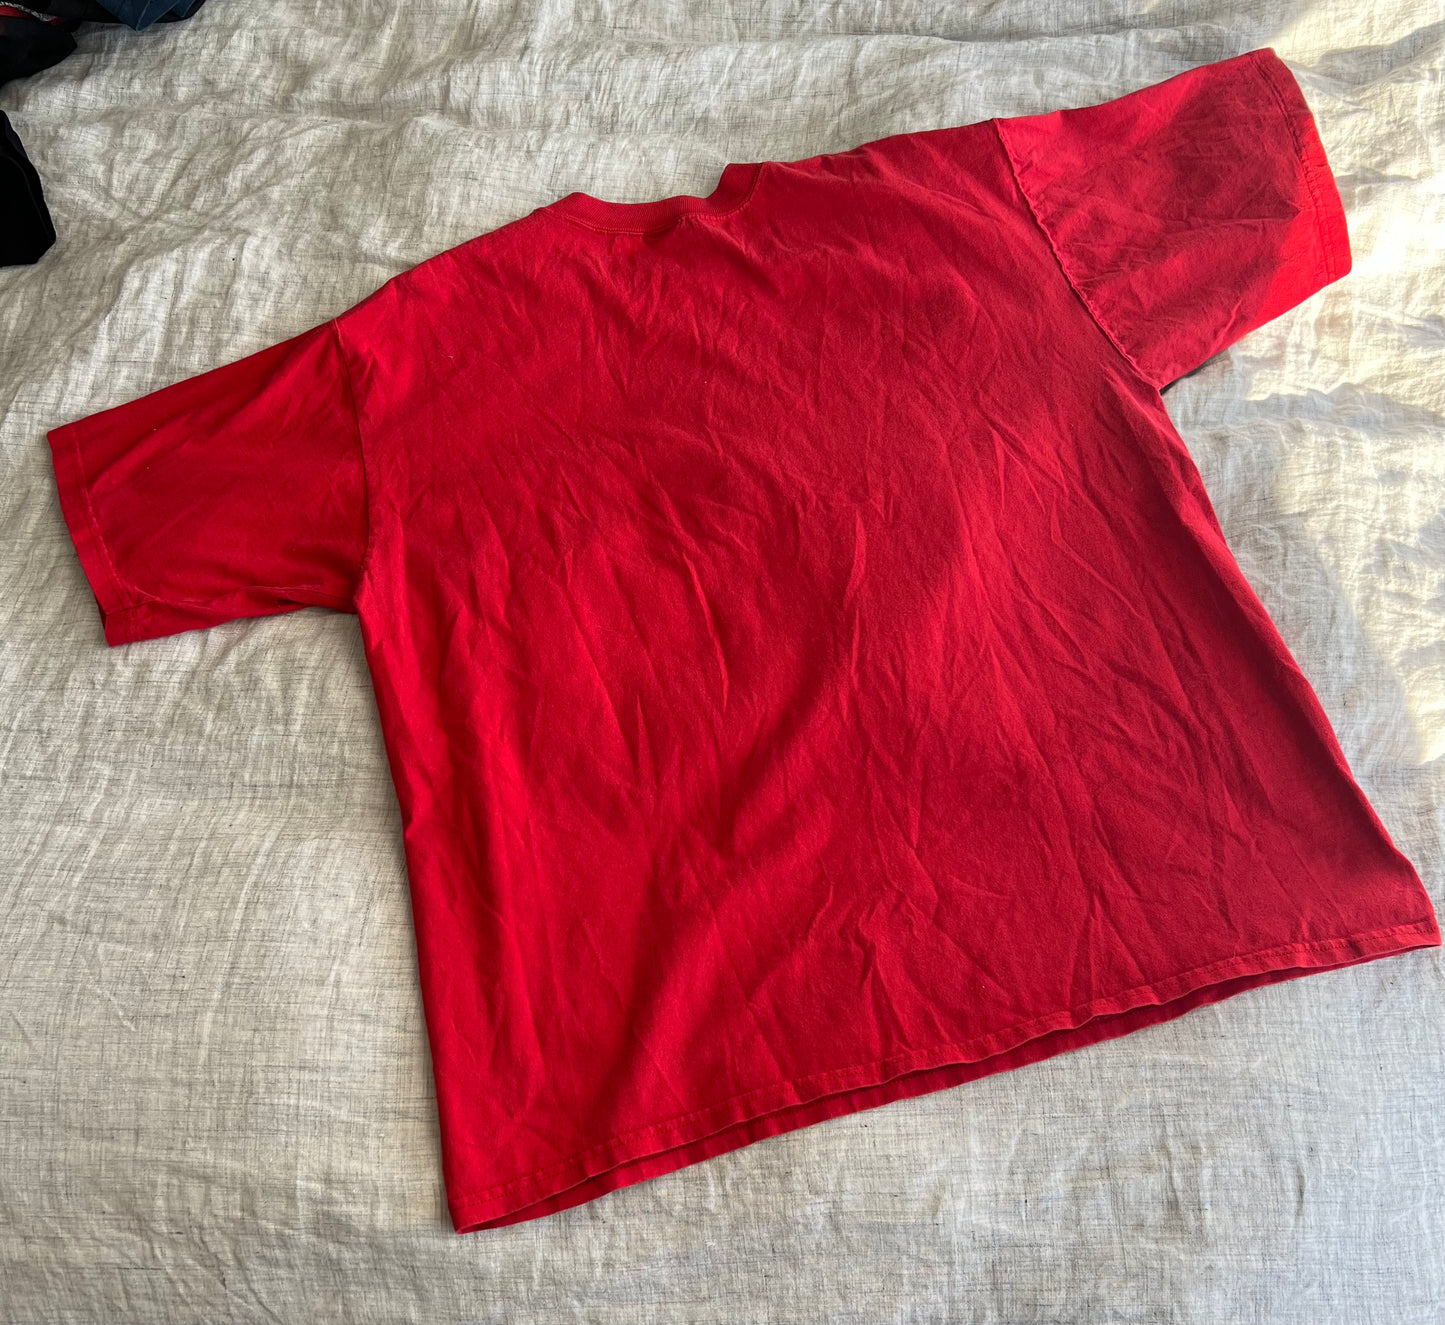 Vintage Detroit Red Wings Shirt